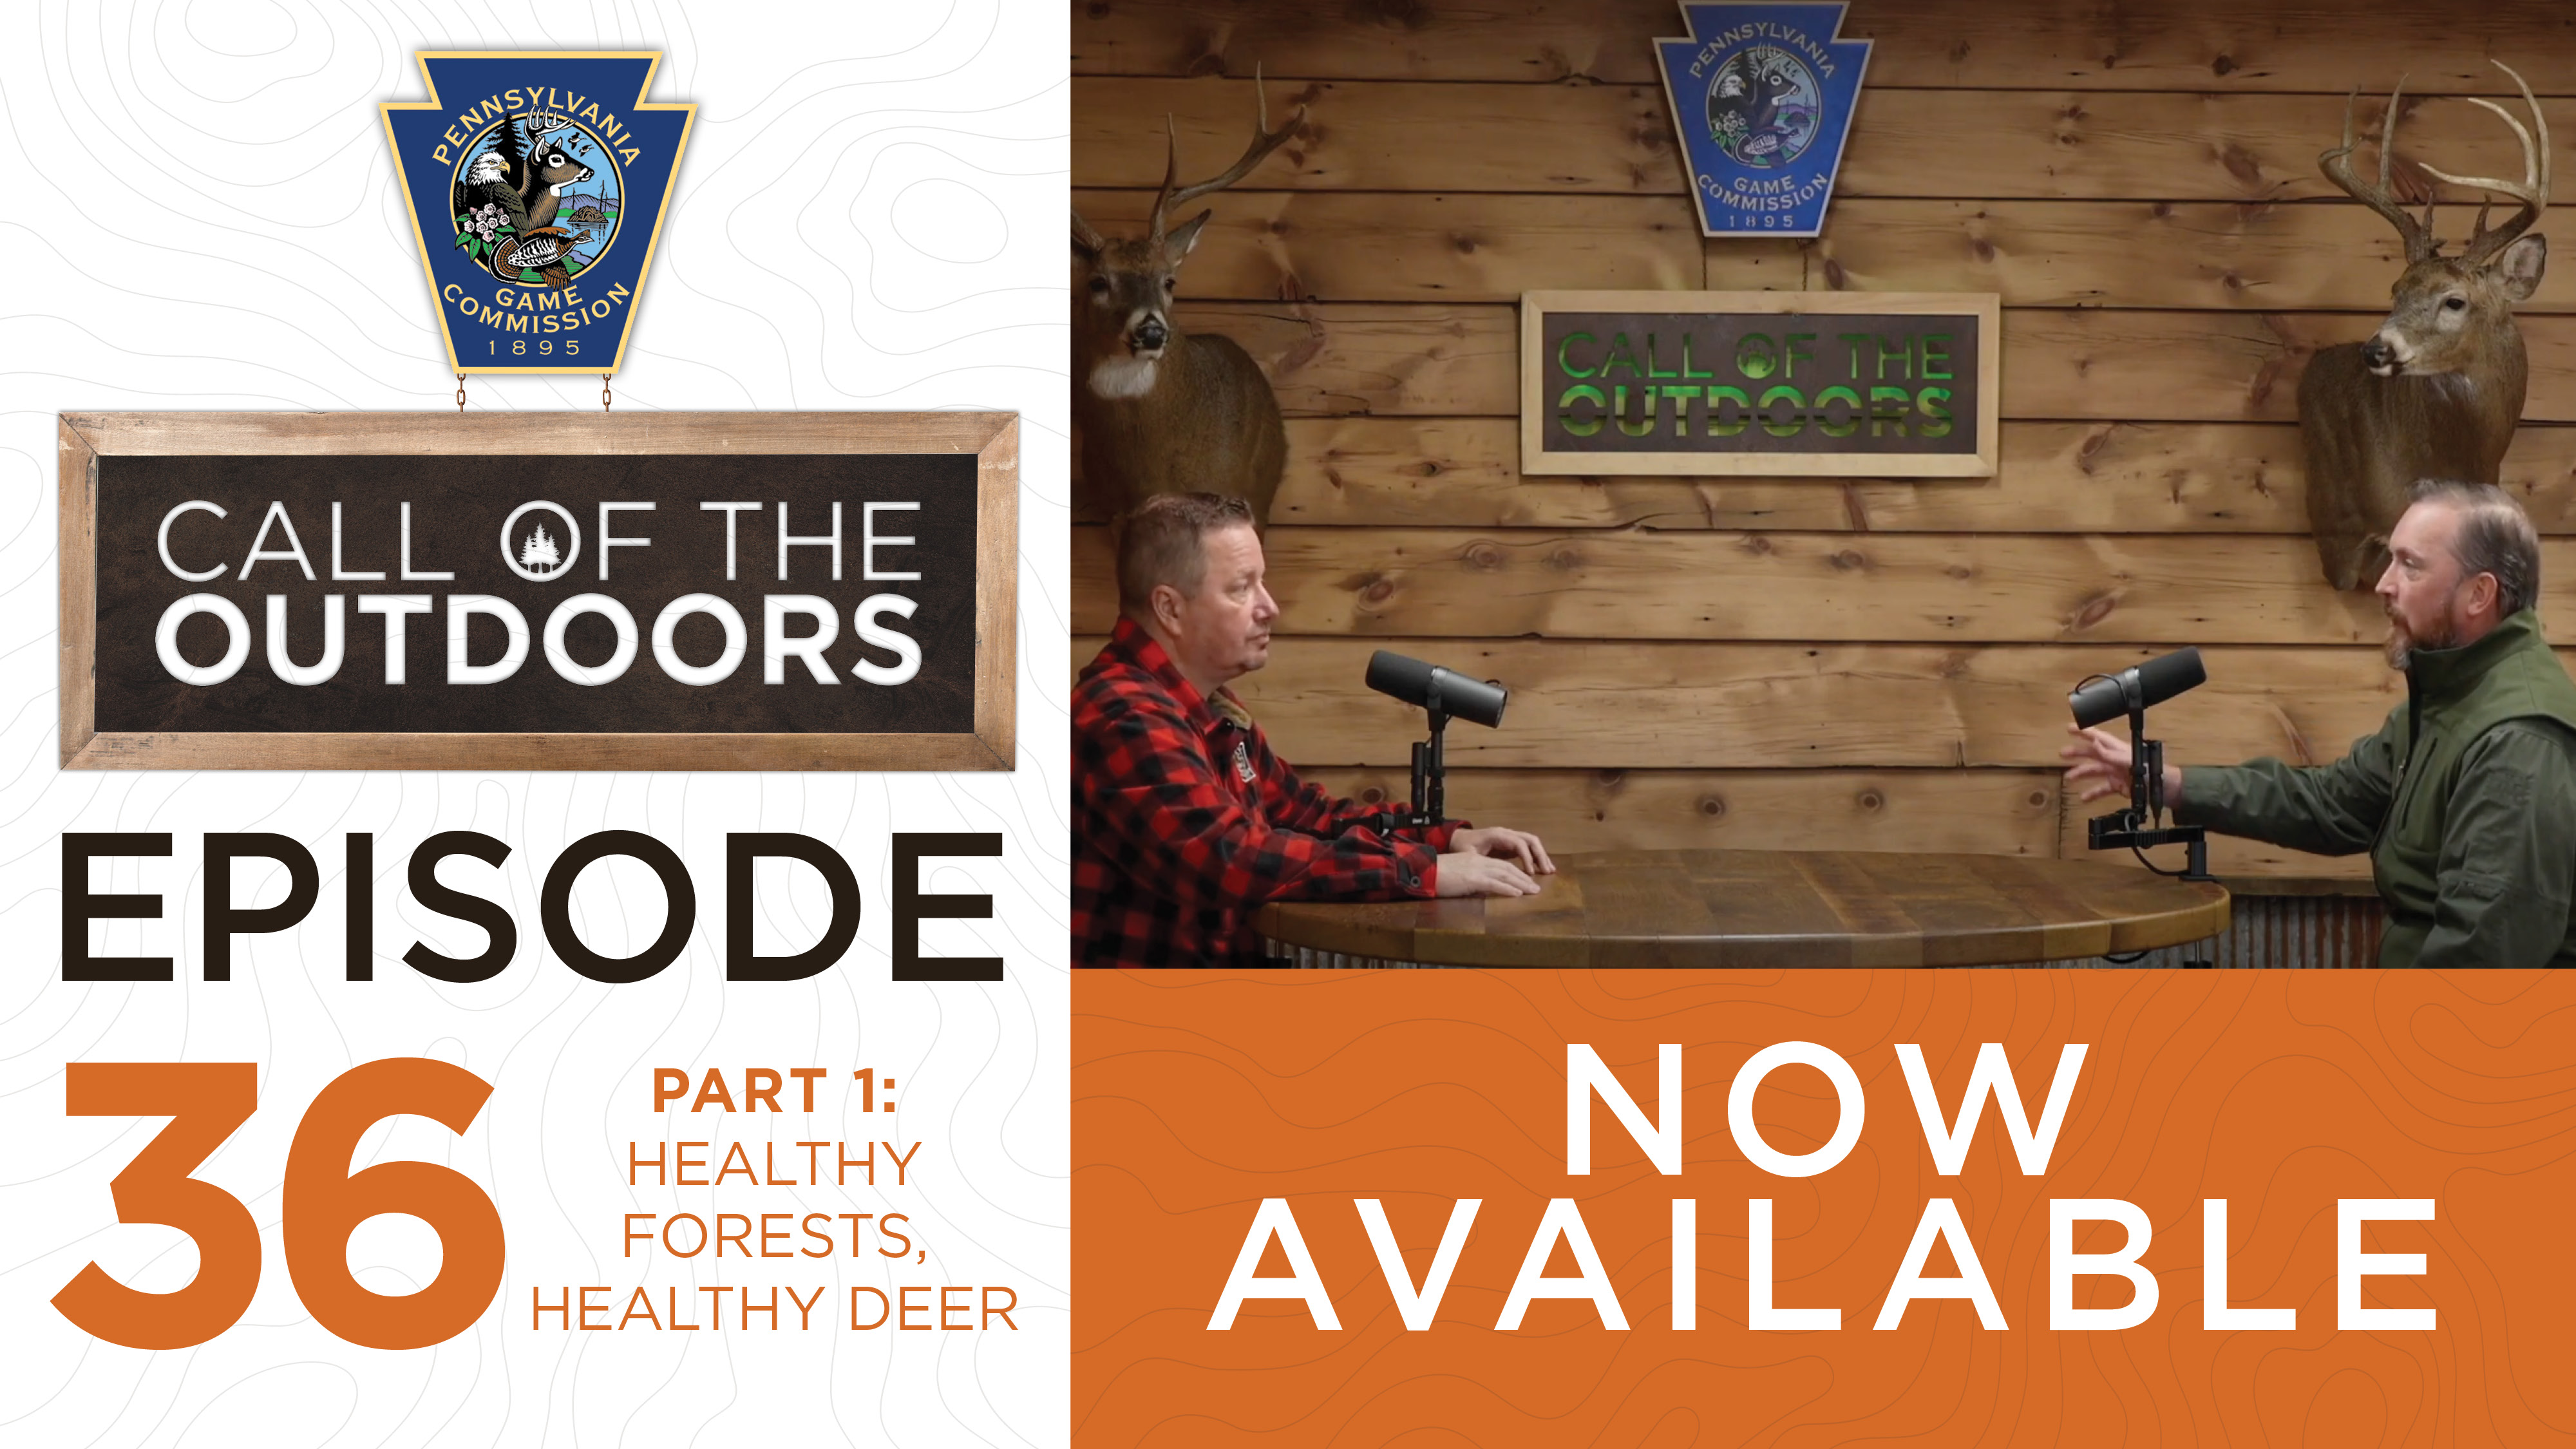 Episode 36 Part 1: Healthy Forests, Healthy Deer